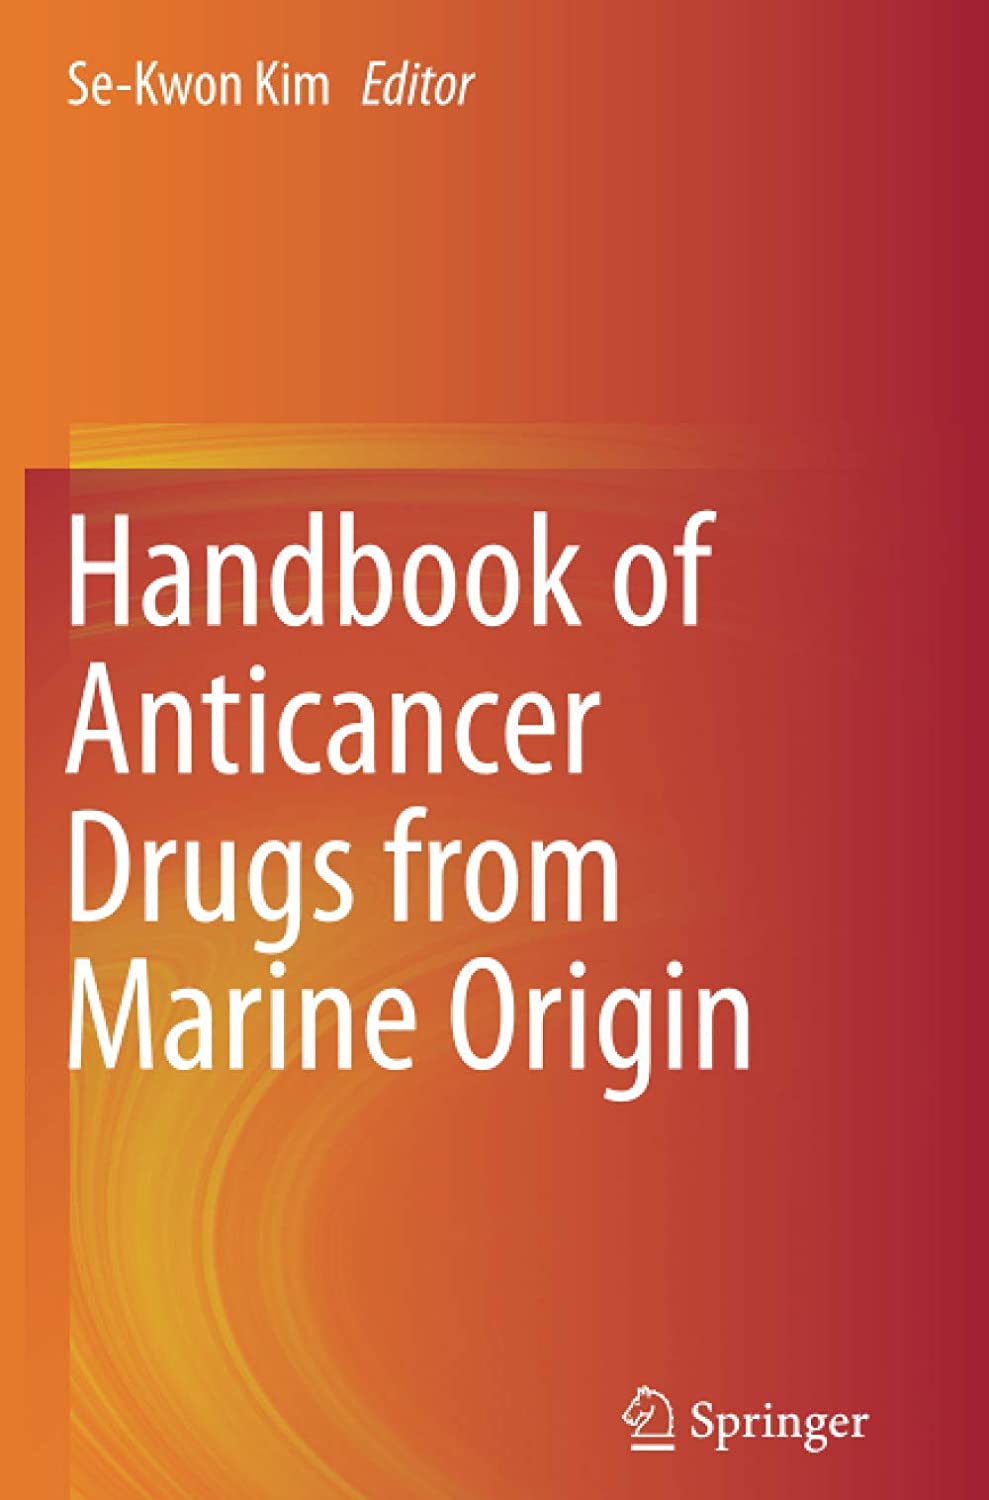 Handbook of Anticancer Drugs from Marine Origin